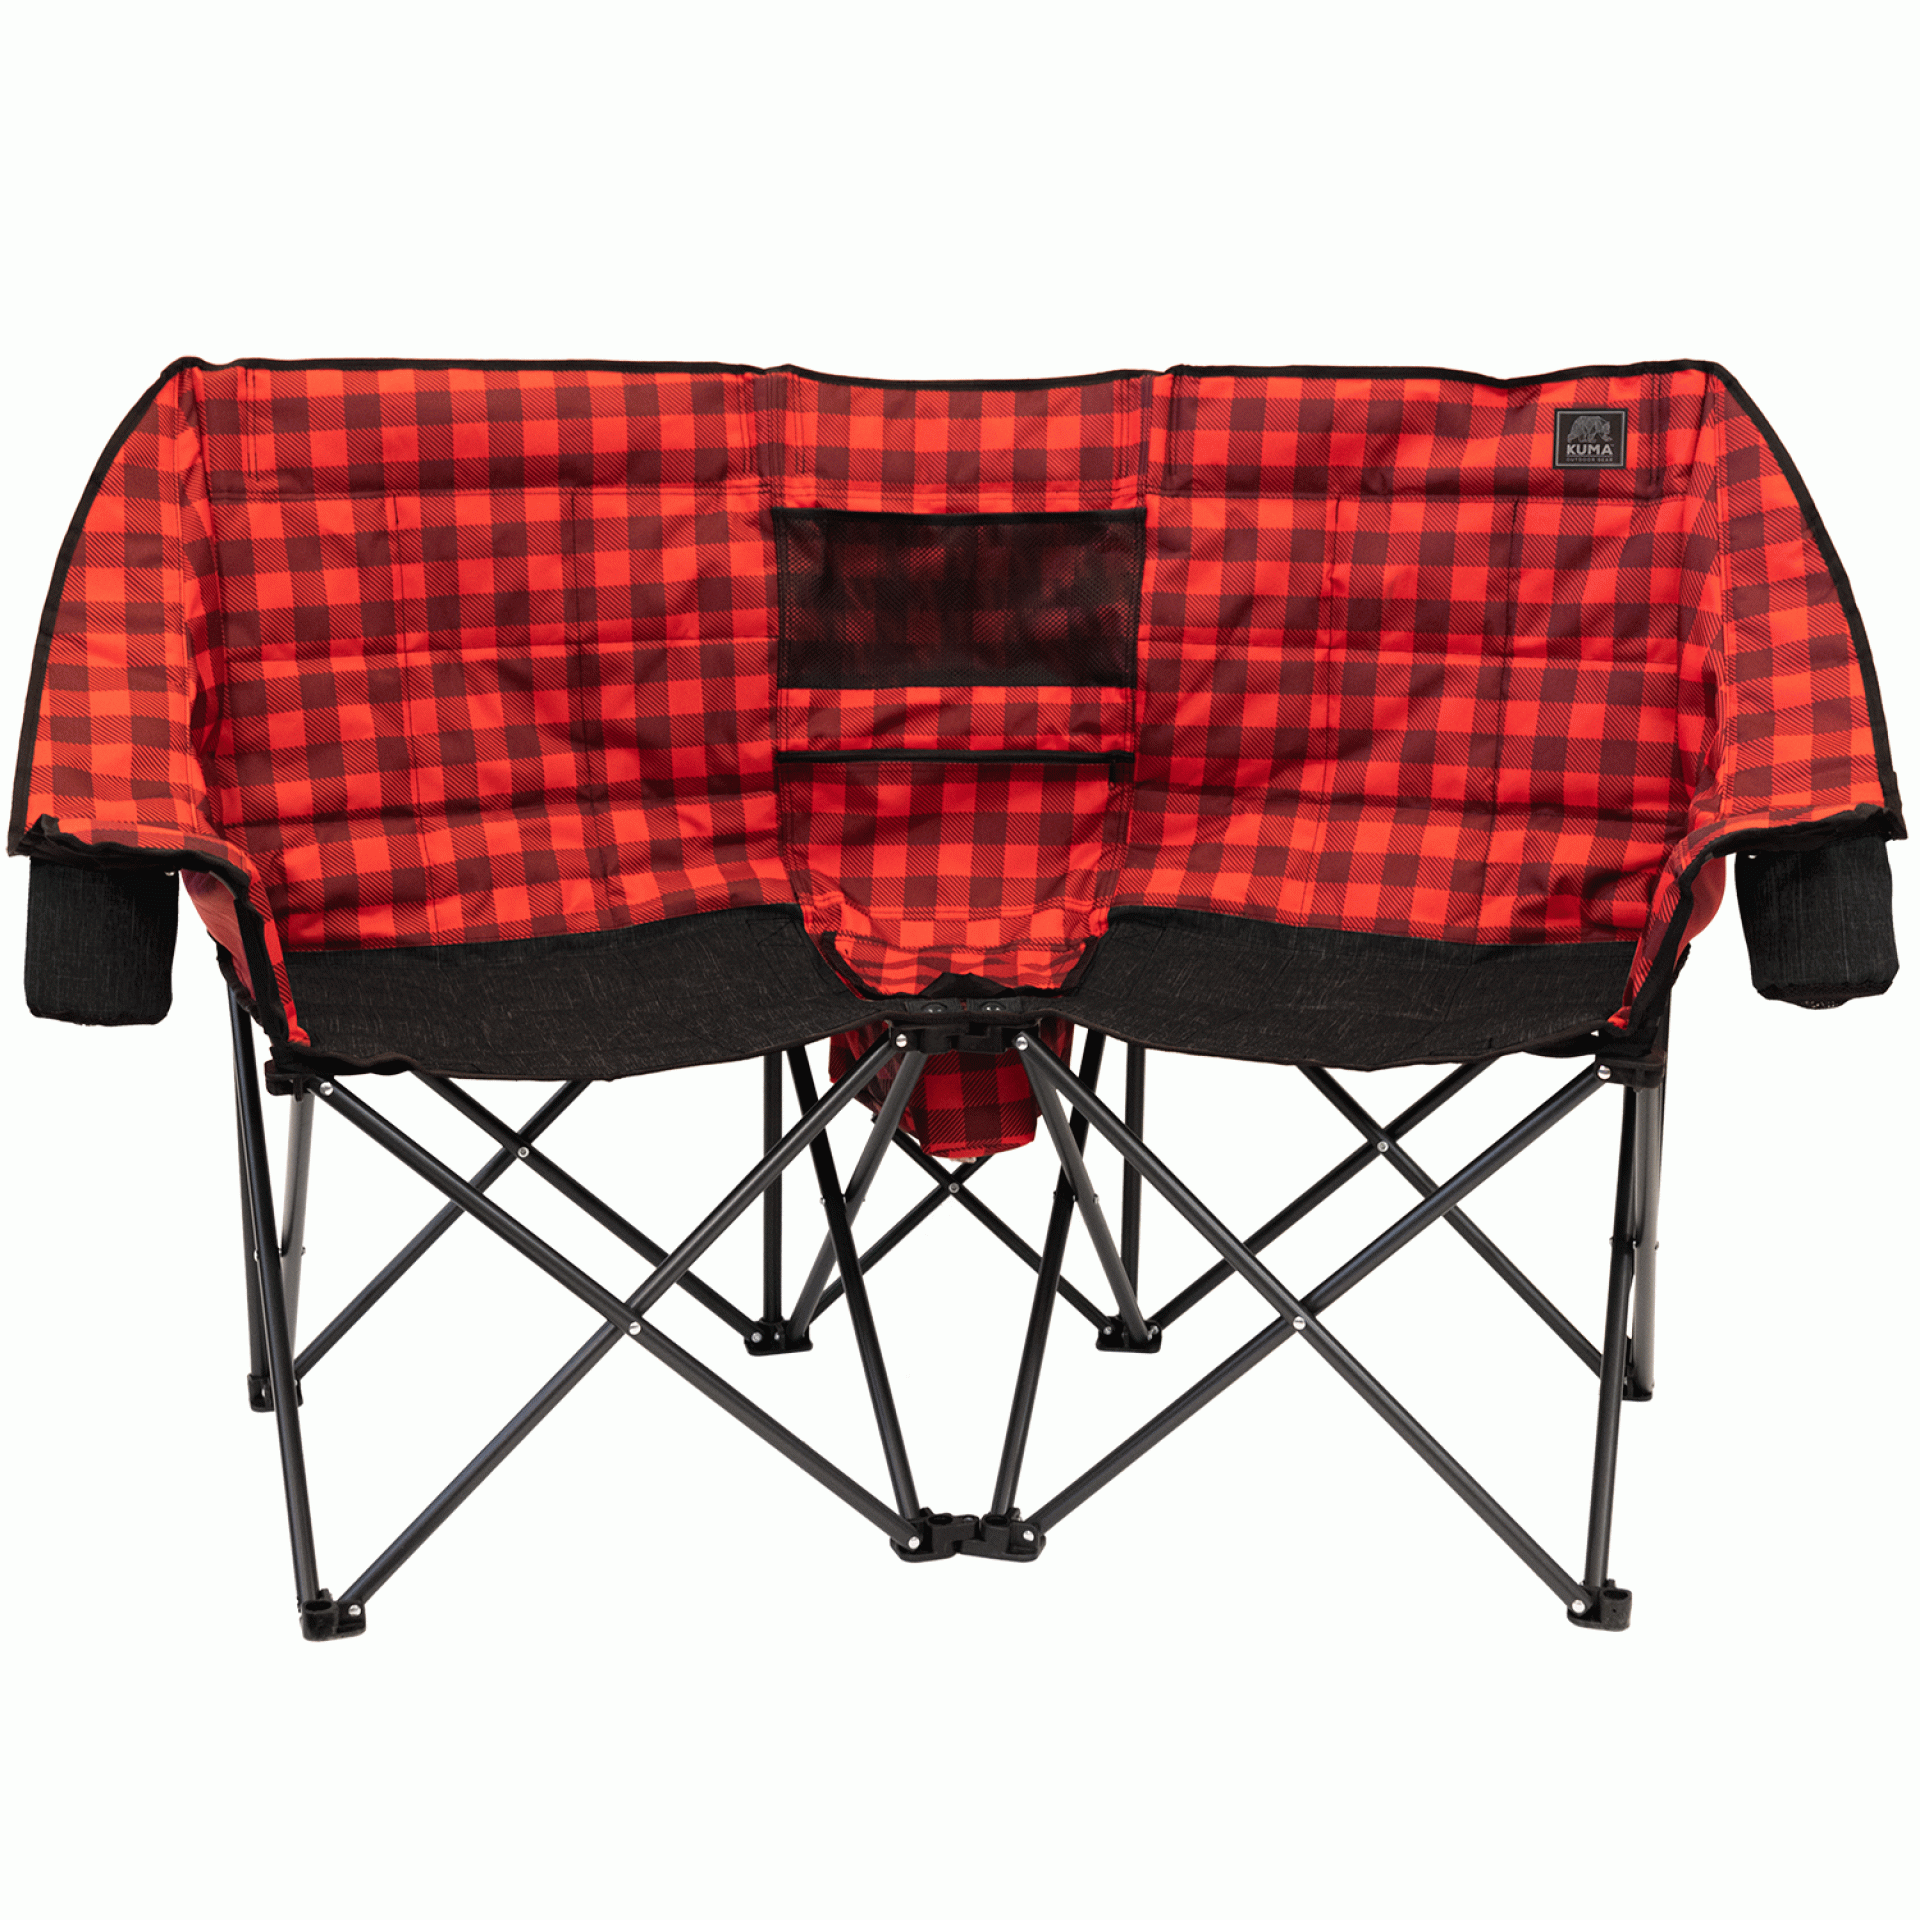 KUMA OUTDOOR GEAR | 872-KM-KBDC-RB | Kozy Bear Double Chair Red/Black